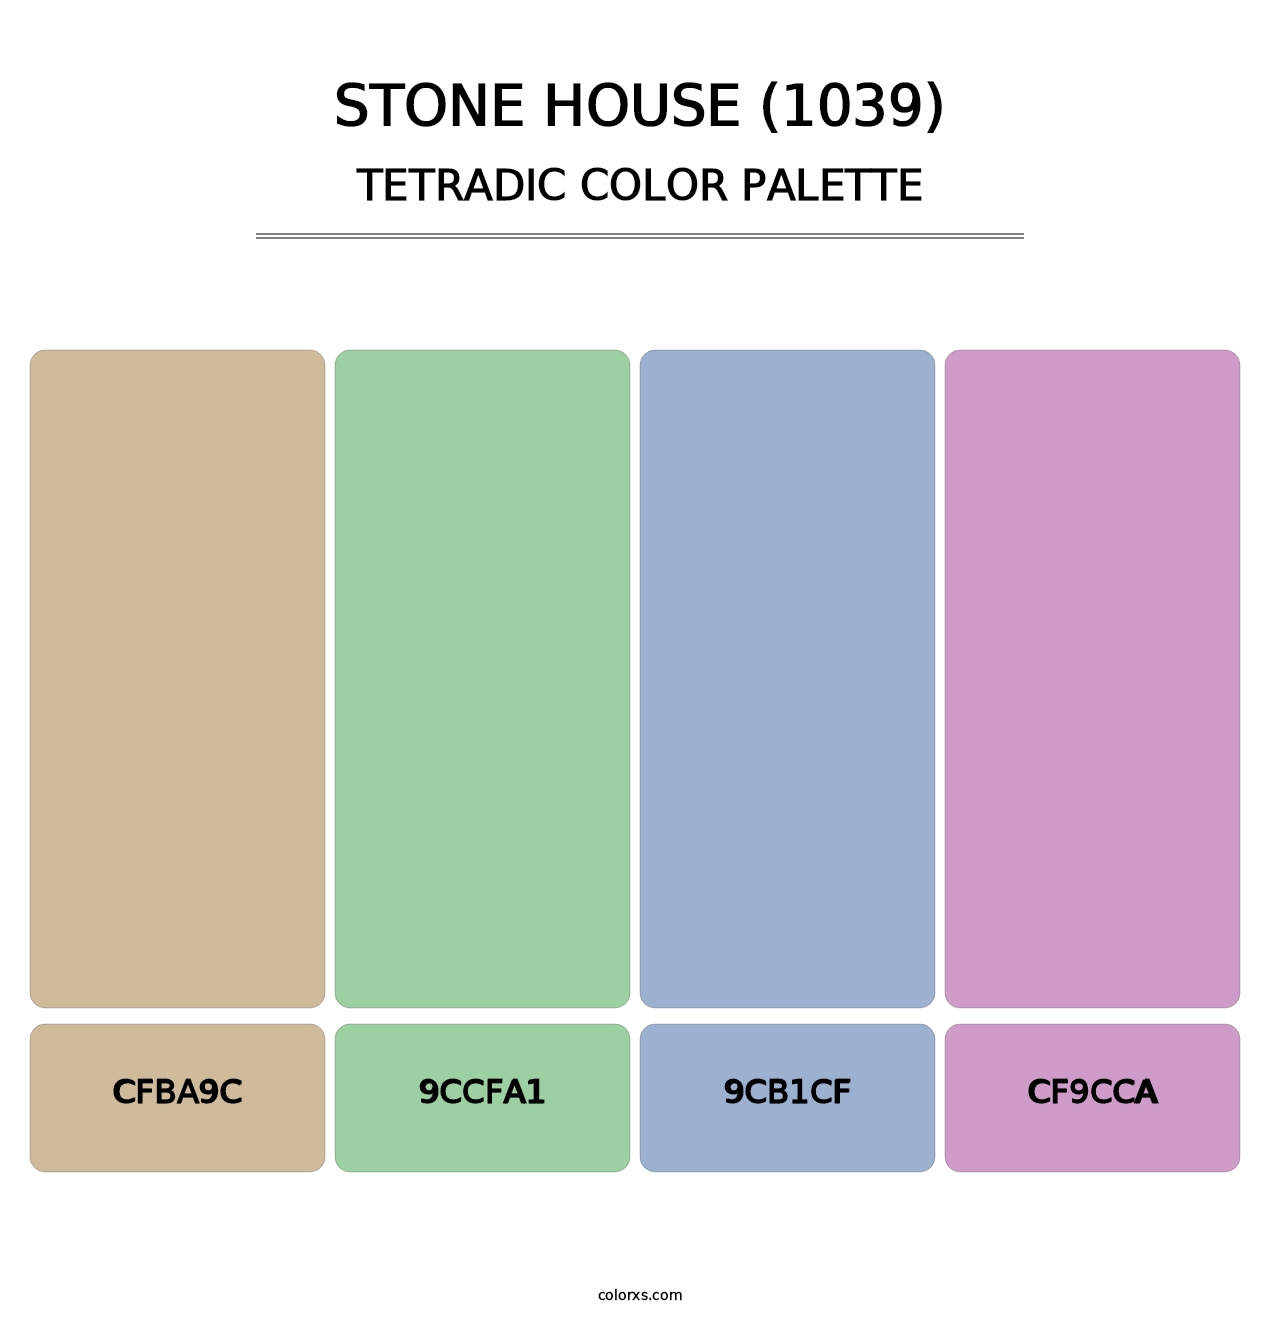 Stone House (1039) - Tetradic Color Palette